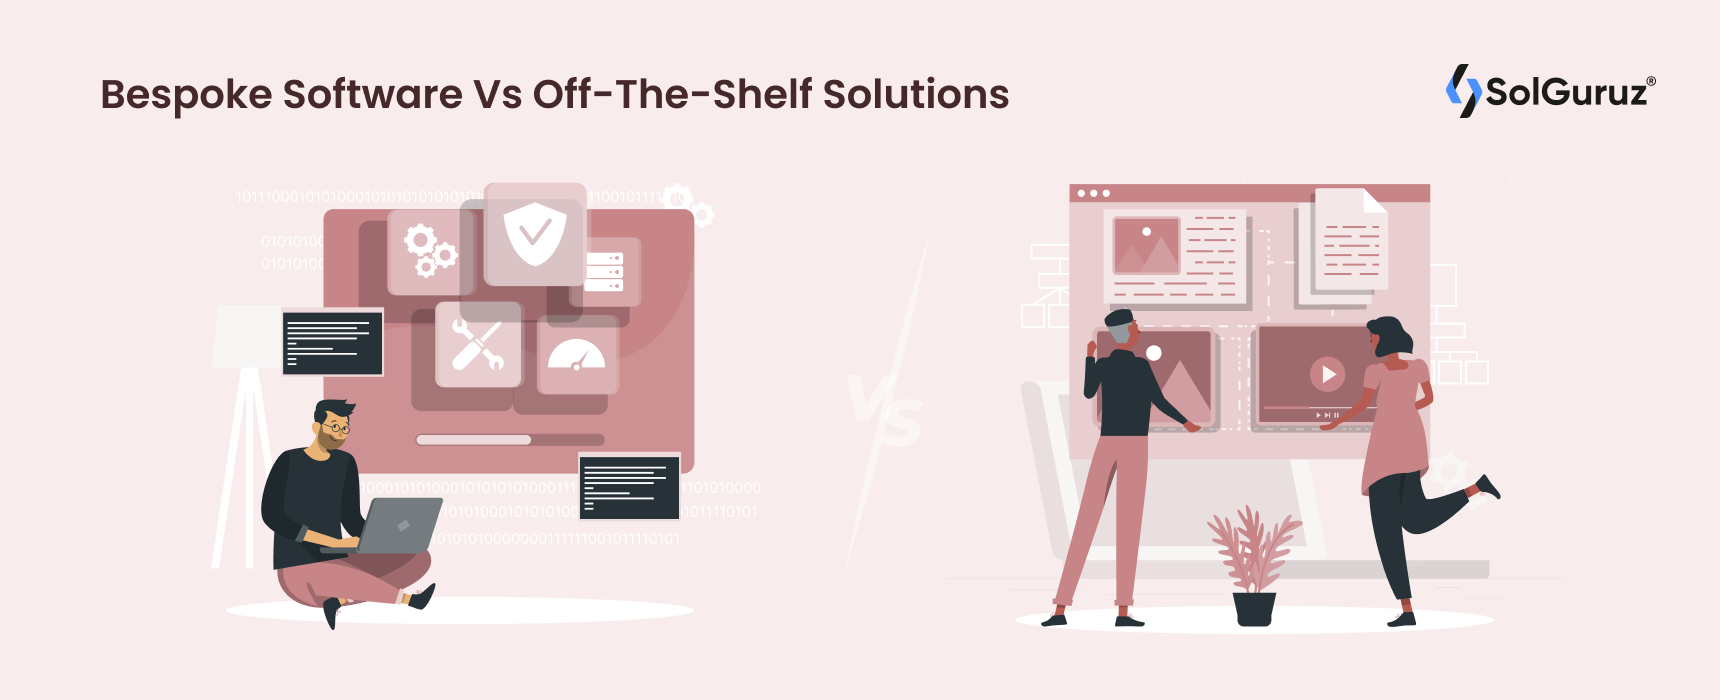 Bespoke Software Vs Off-The-Shelf Solutions